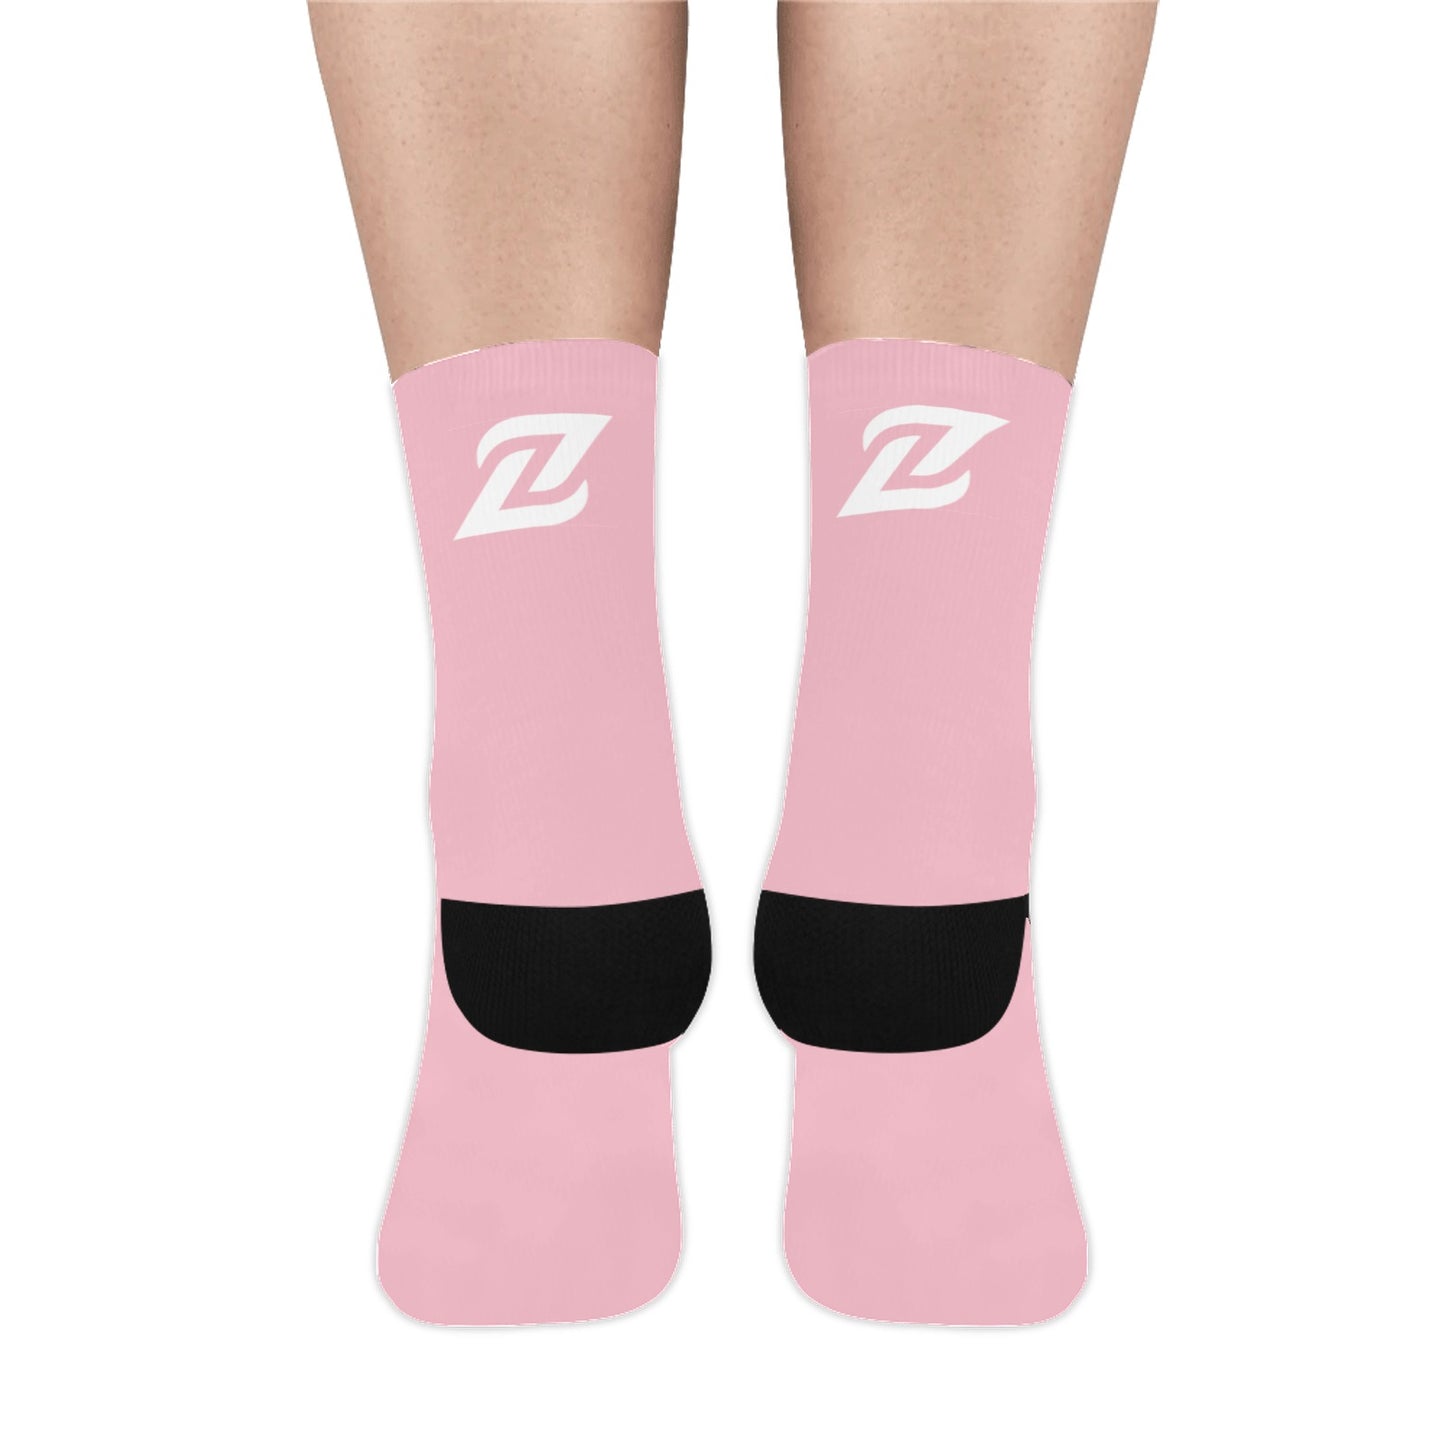 Zen Socks - Pink